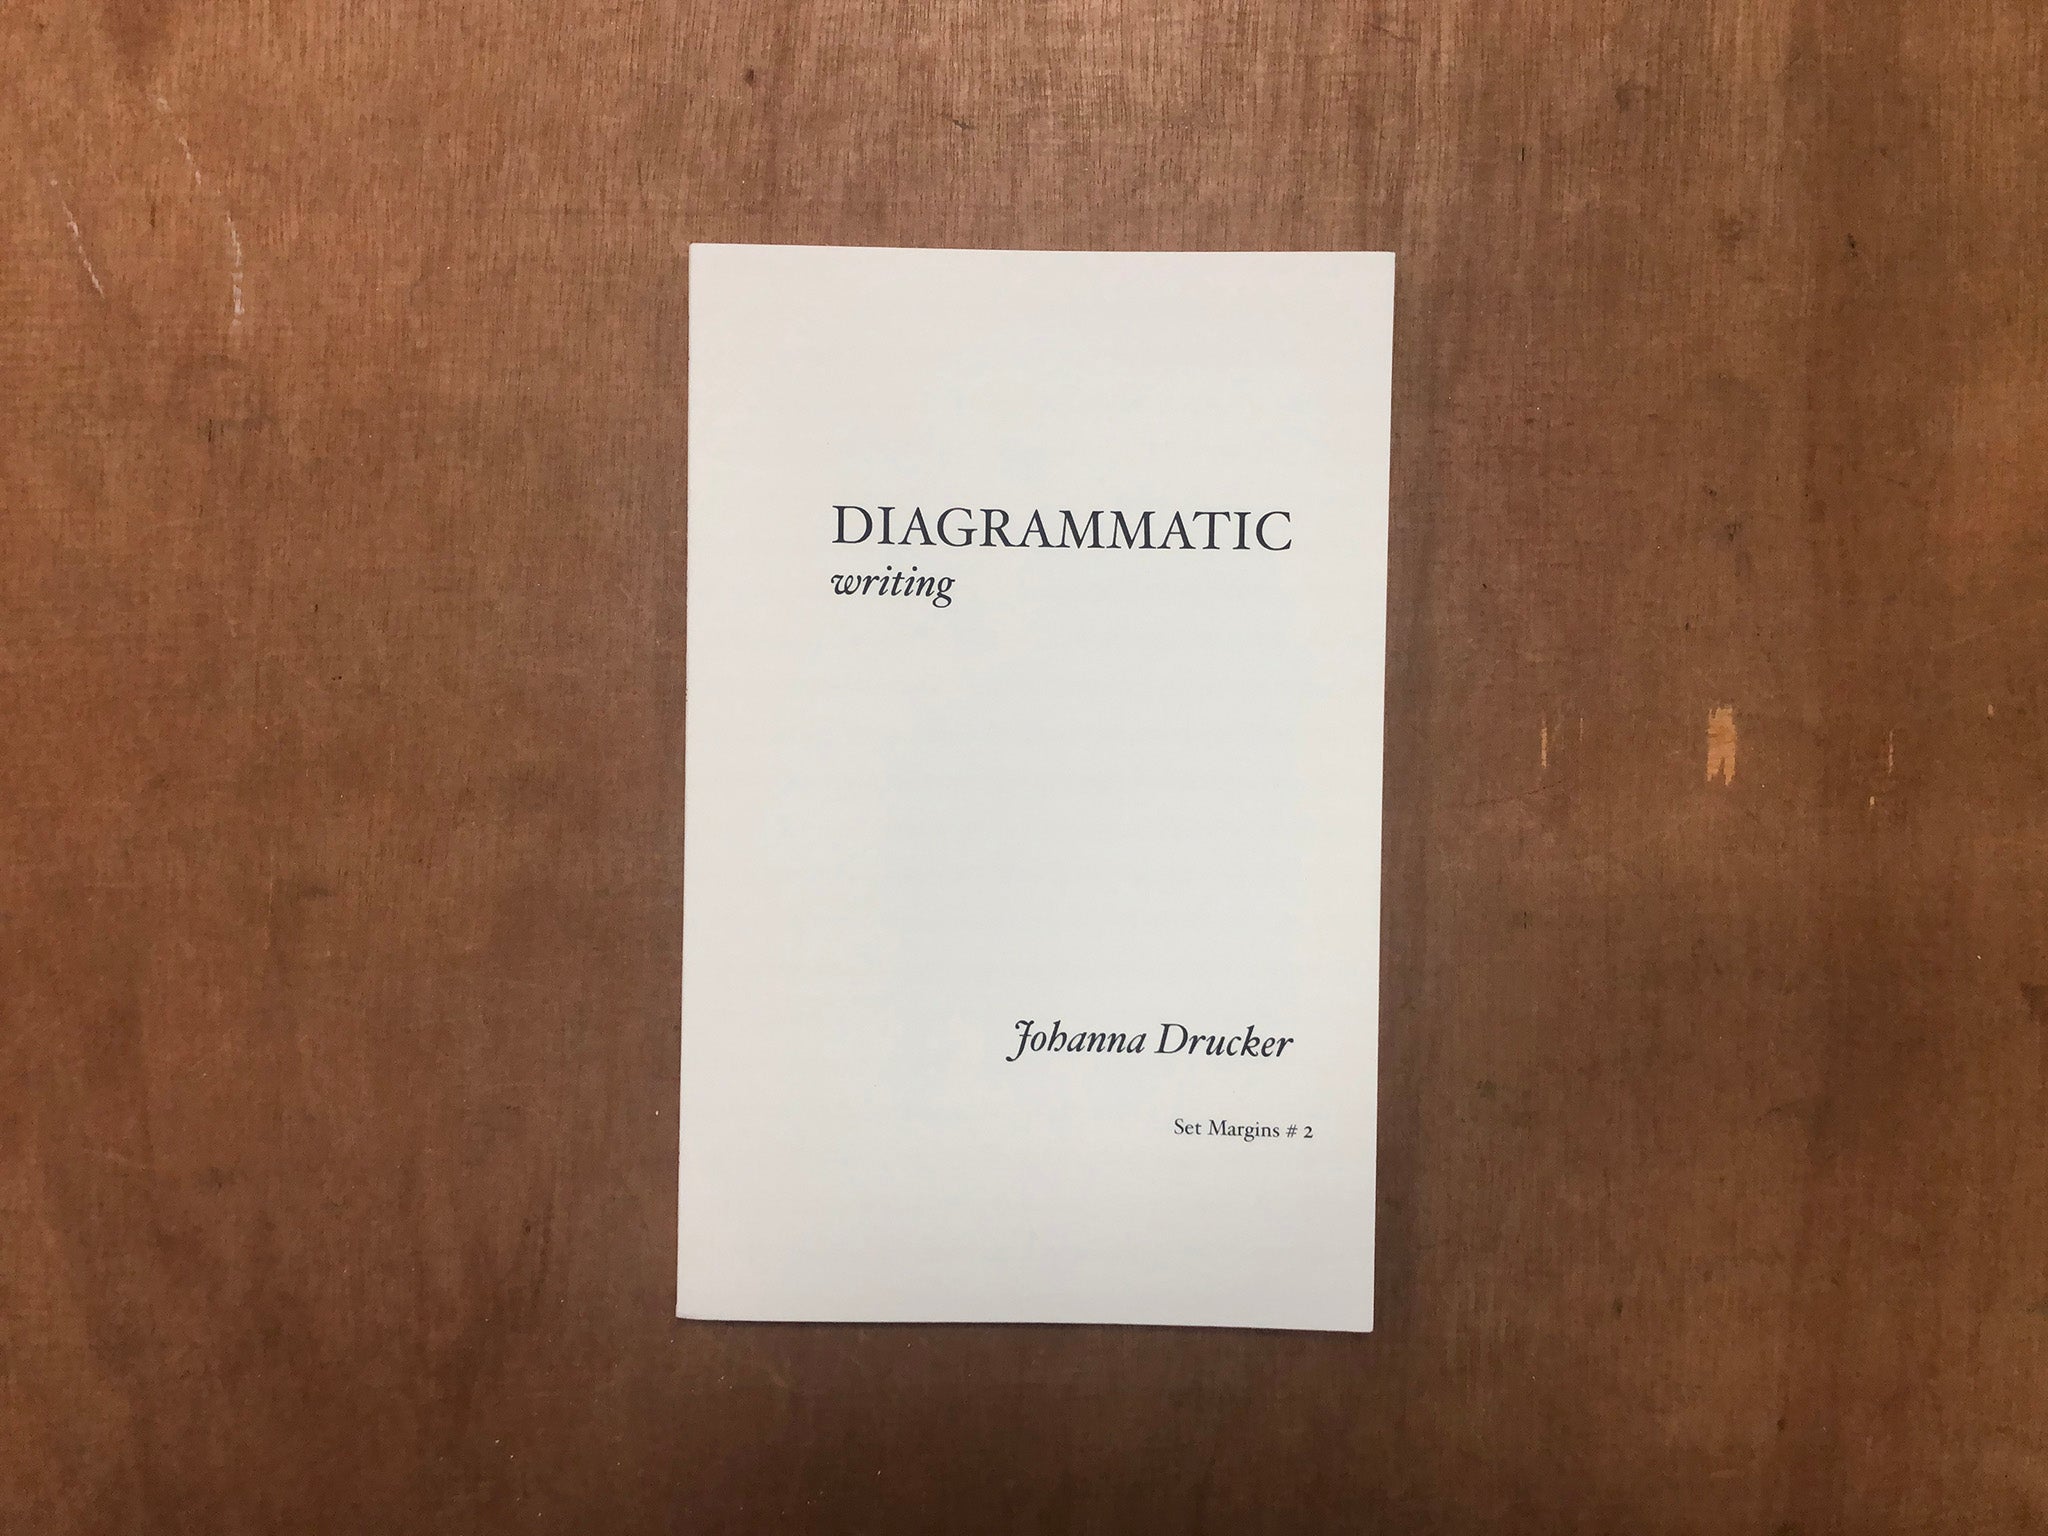 DIAGRAMMATIC WRITING by Johanna Drucker